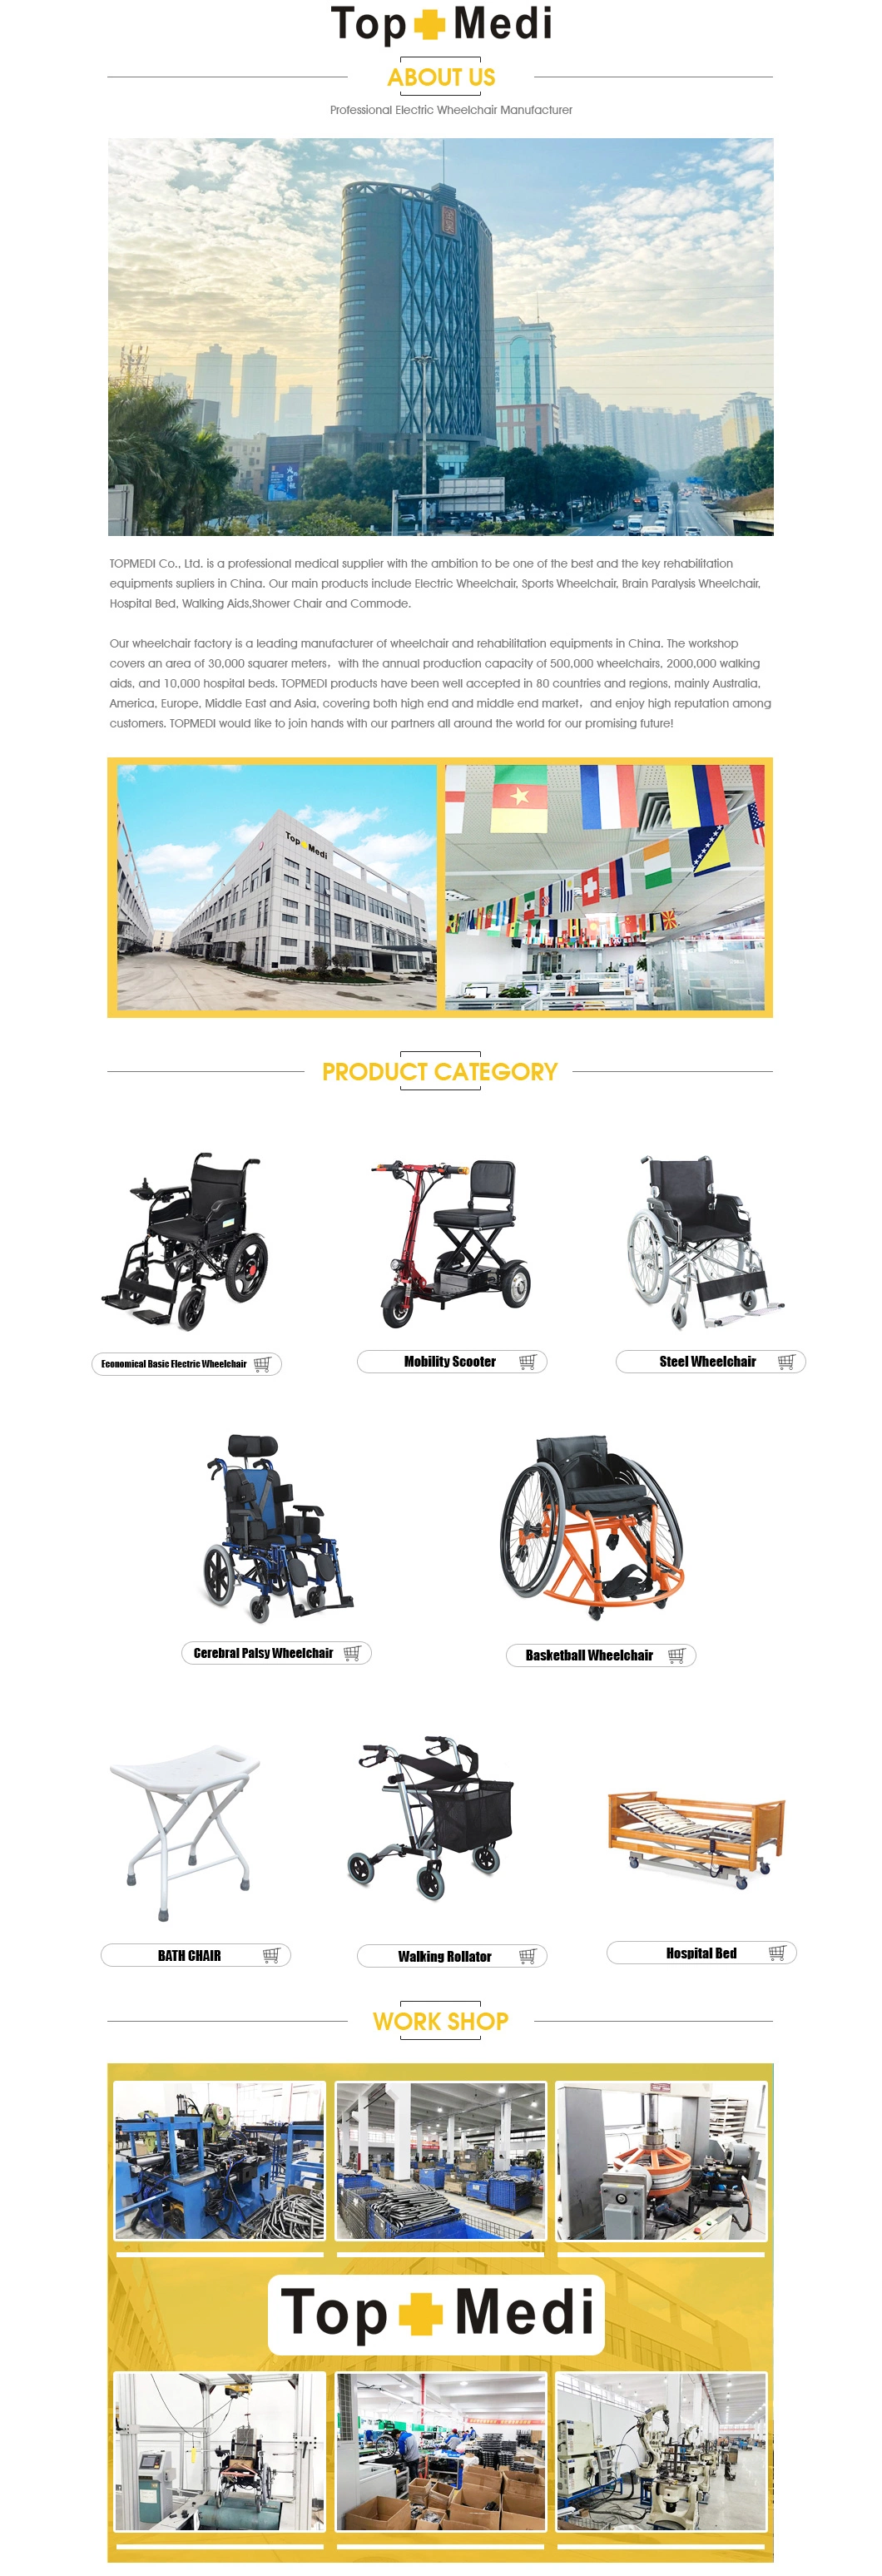 Reclining High Back Adjustable Electric Wheelchair Rehabilitate Wheelchair for Elderly Handicapped Wheelchair